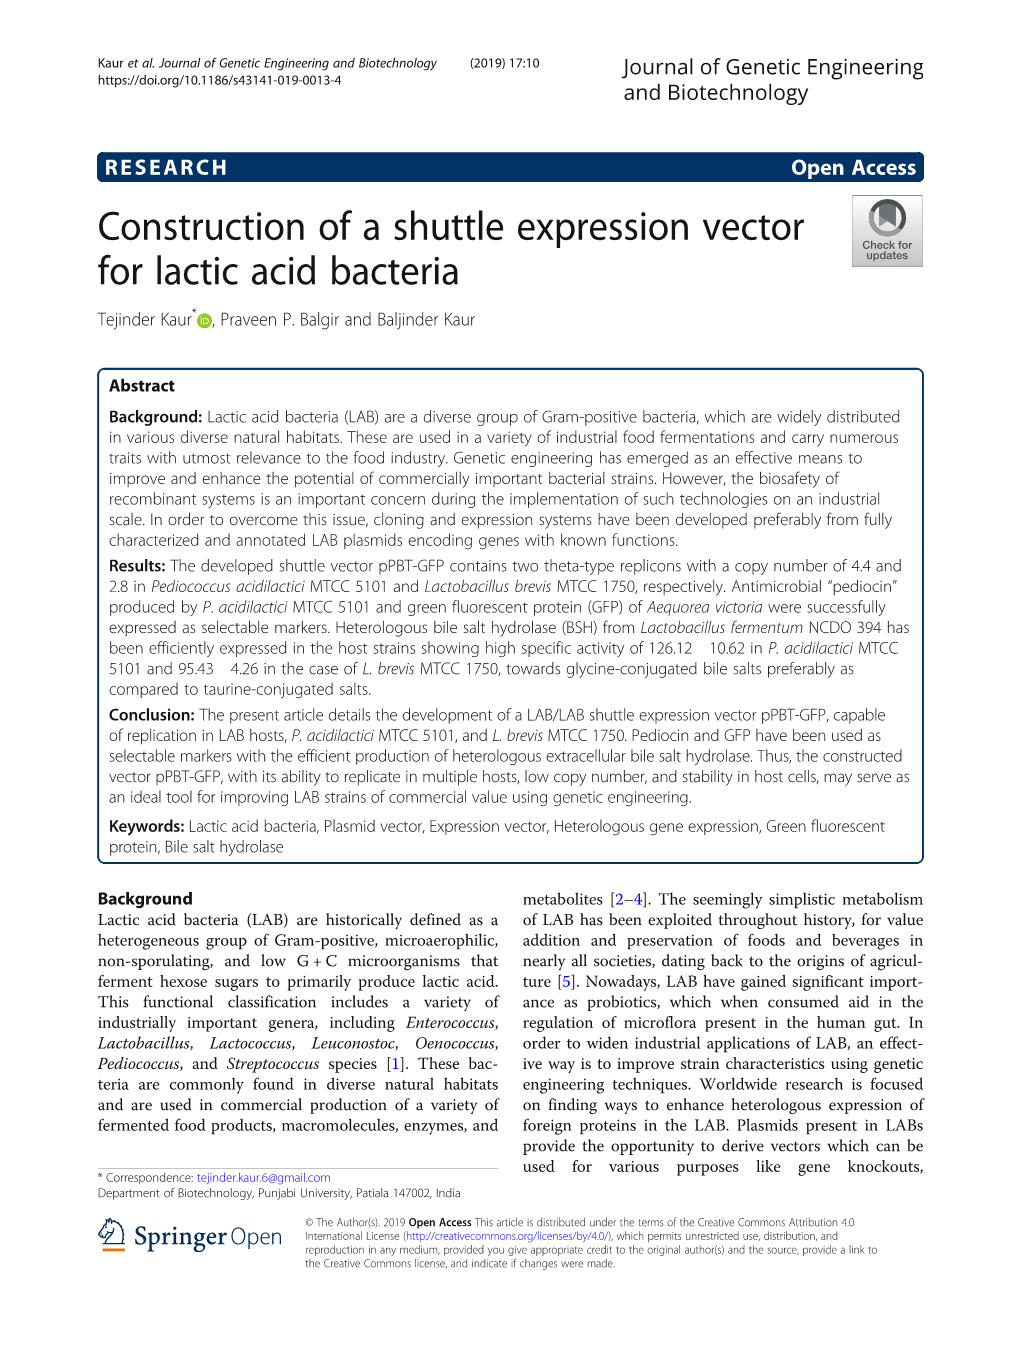 Construction of a Shuttle Expression Vector for Lactic Acid Bacteria Tejinder Kaur* , Praveen P